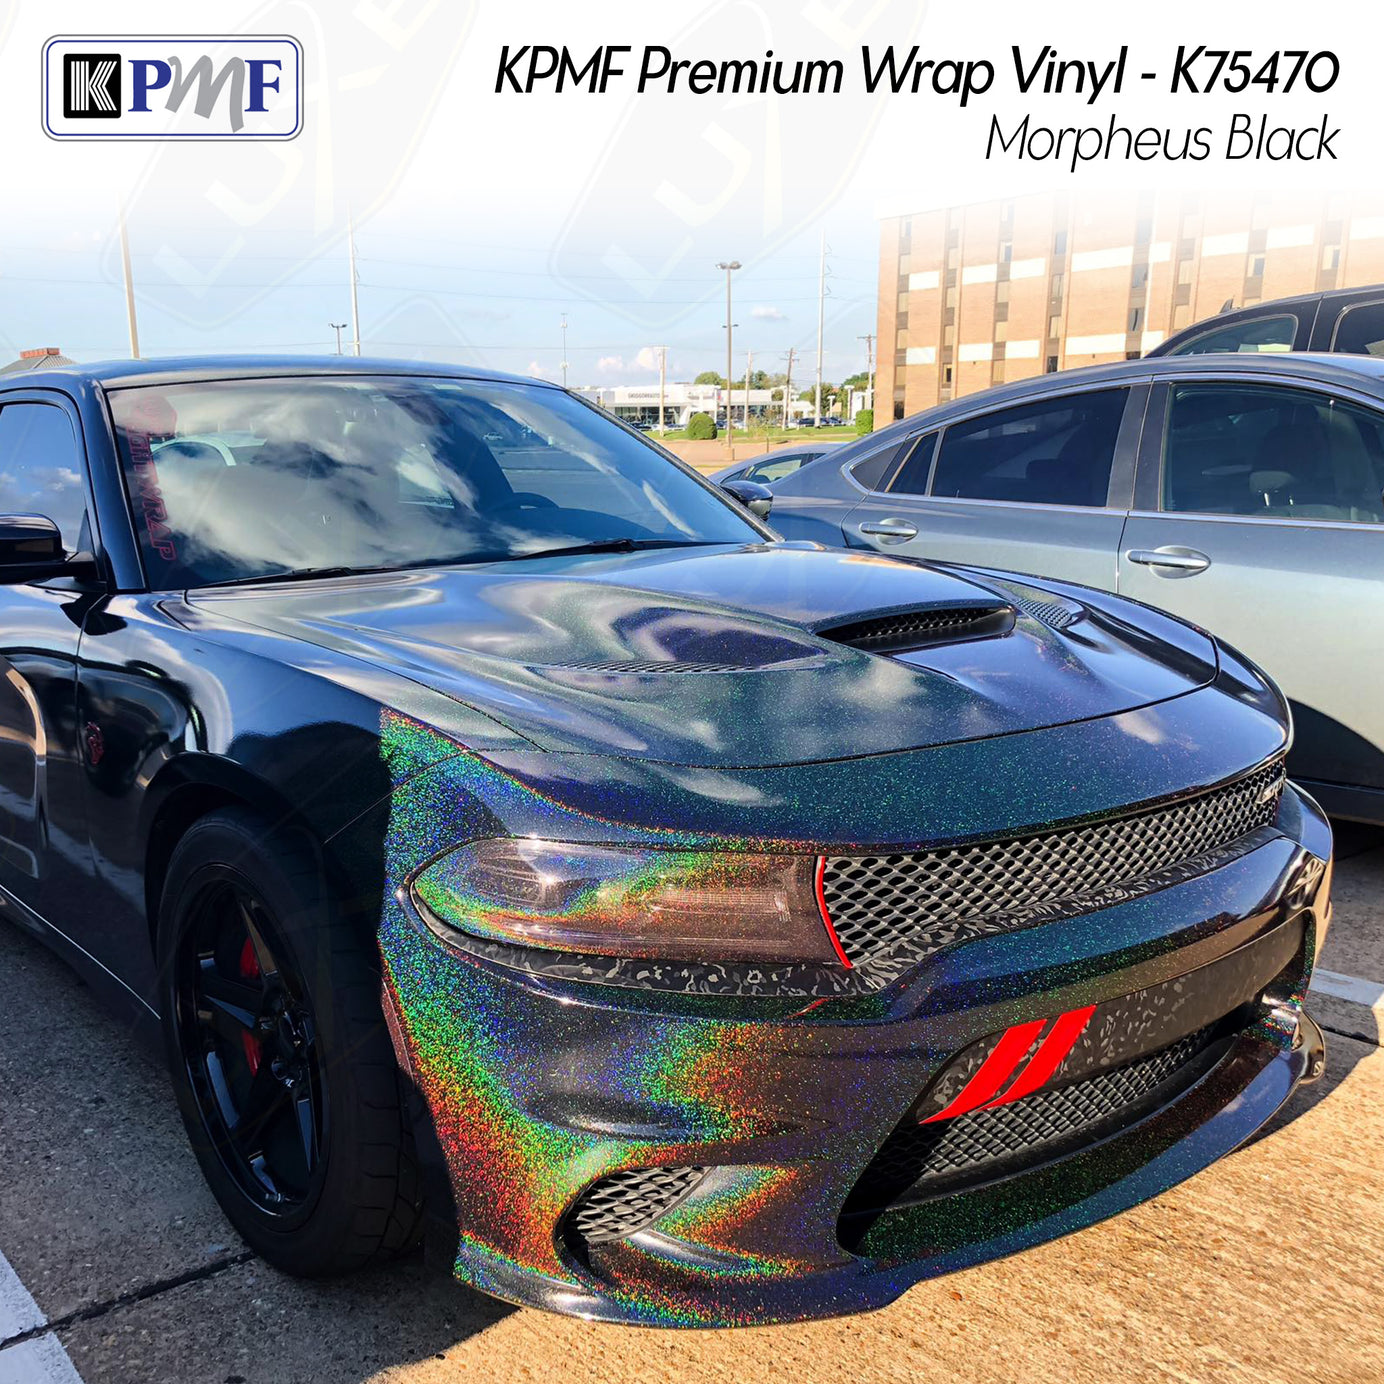 KPMF Gloss Morpheus Black Wrap Vinyl - K75470